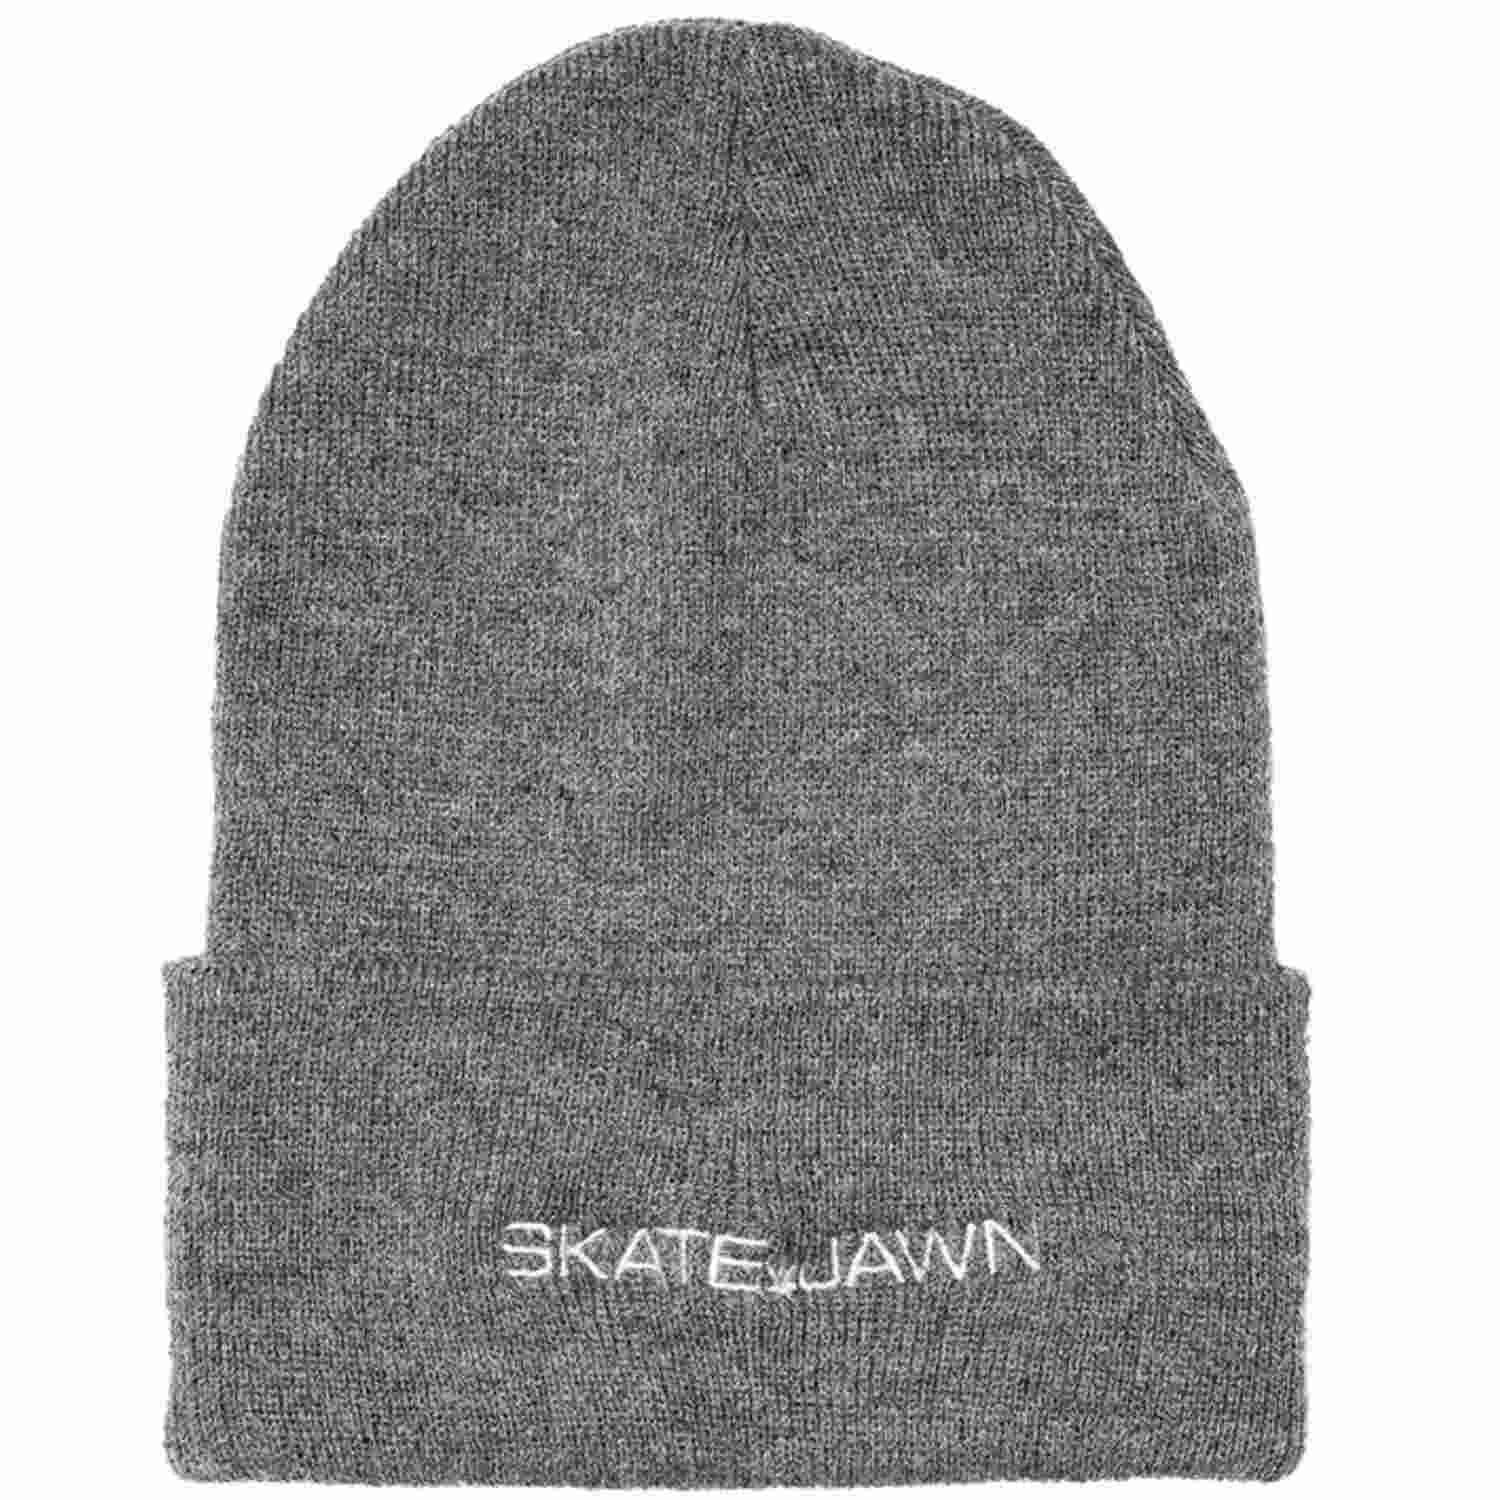  Skate Jawn Chronic Beanie - Grey